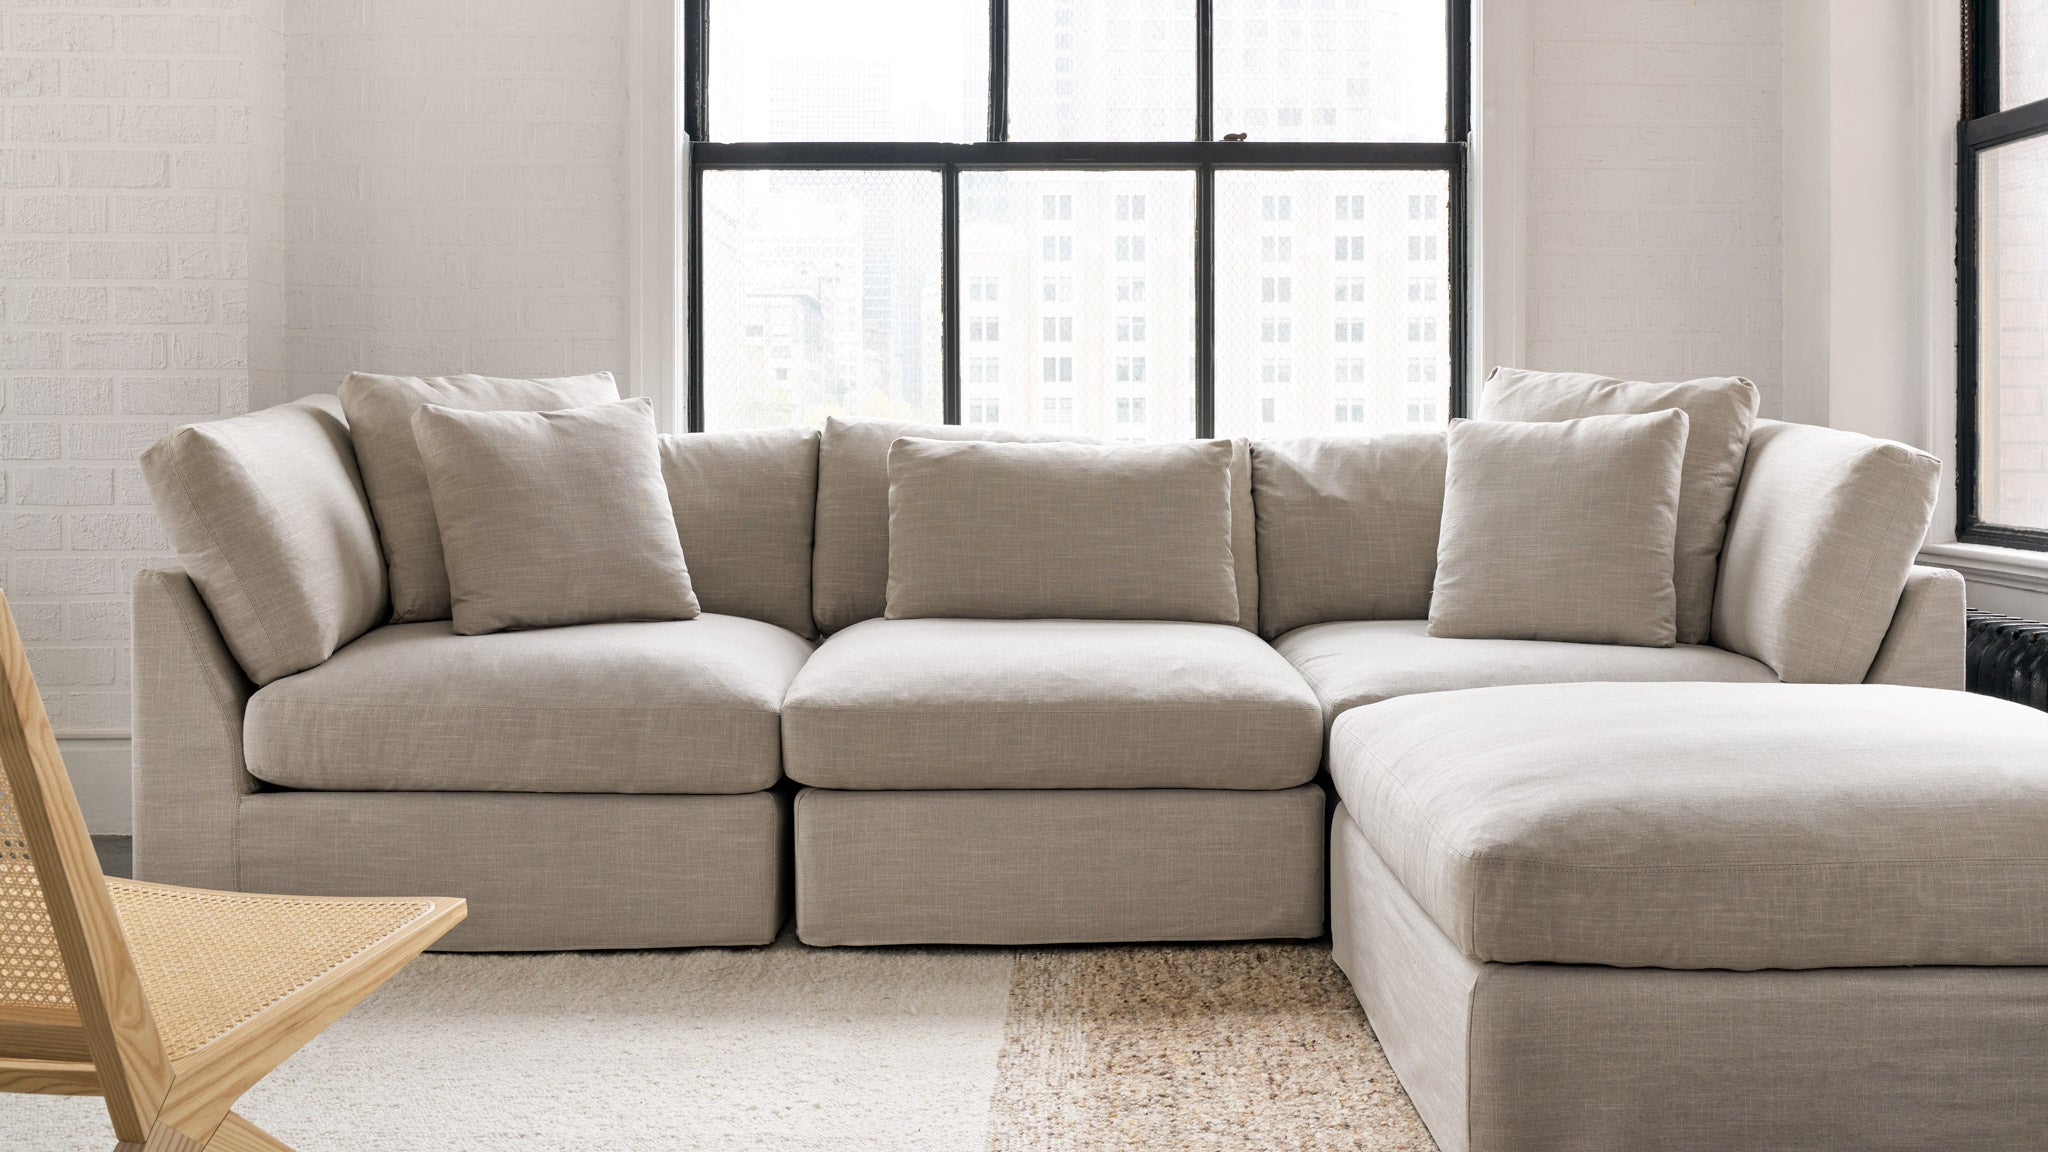 Get Together™ 2-Piece Modular Sofa, Large, Light Pebble - Image 5